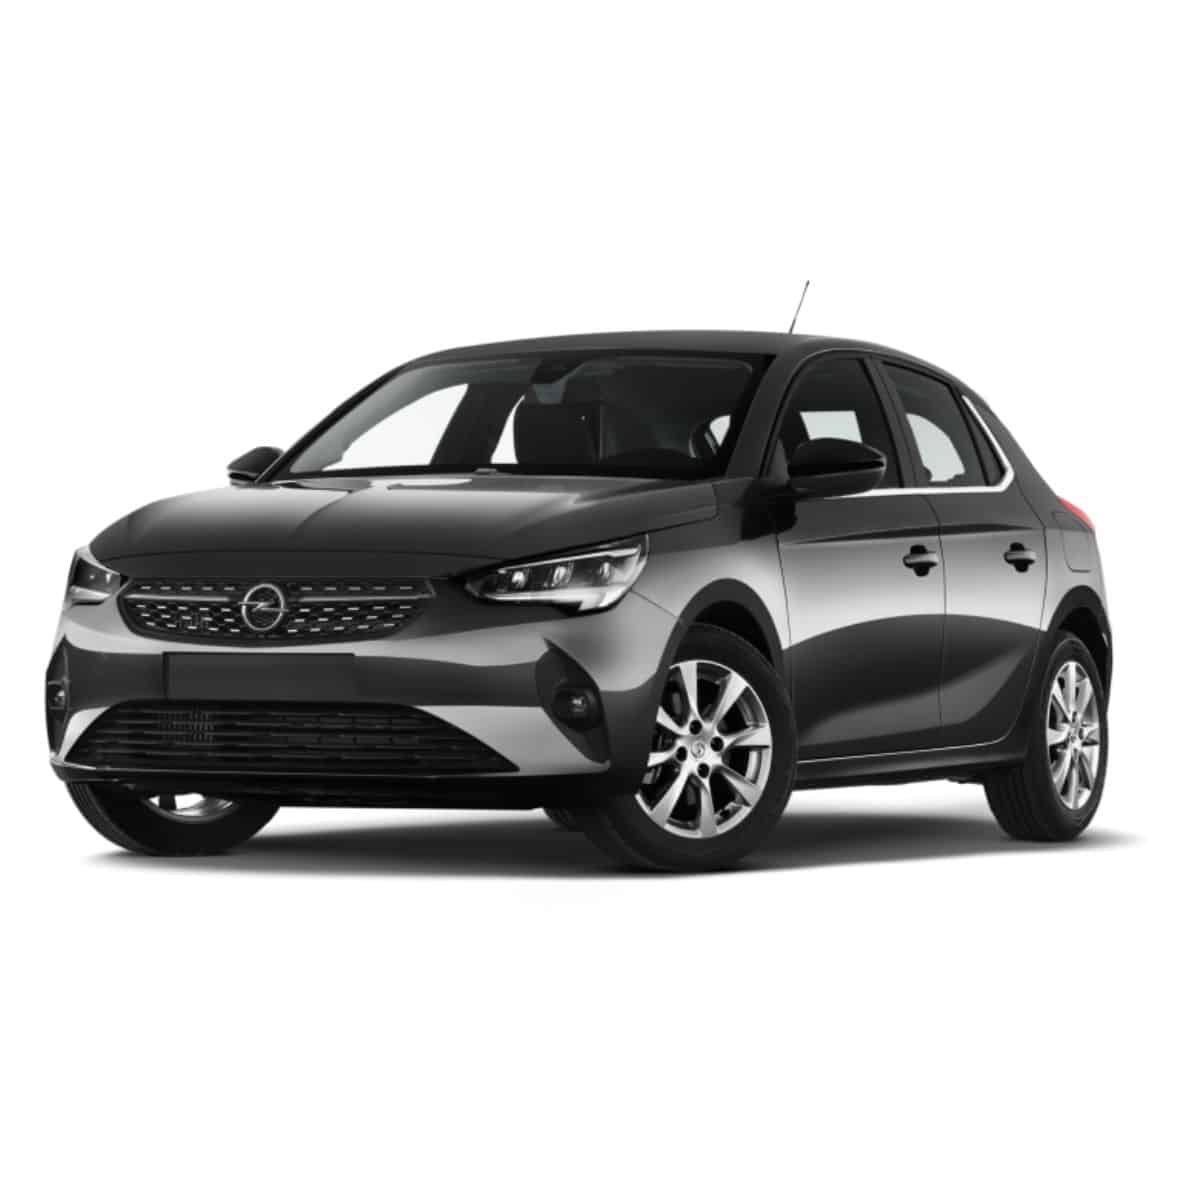 Opel Corsa Noleggio Lungo Termine senza anticipo con Key Renting